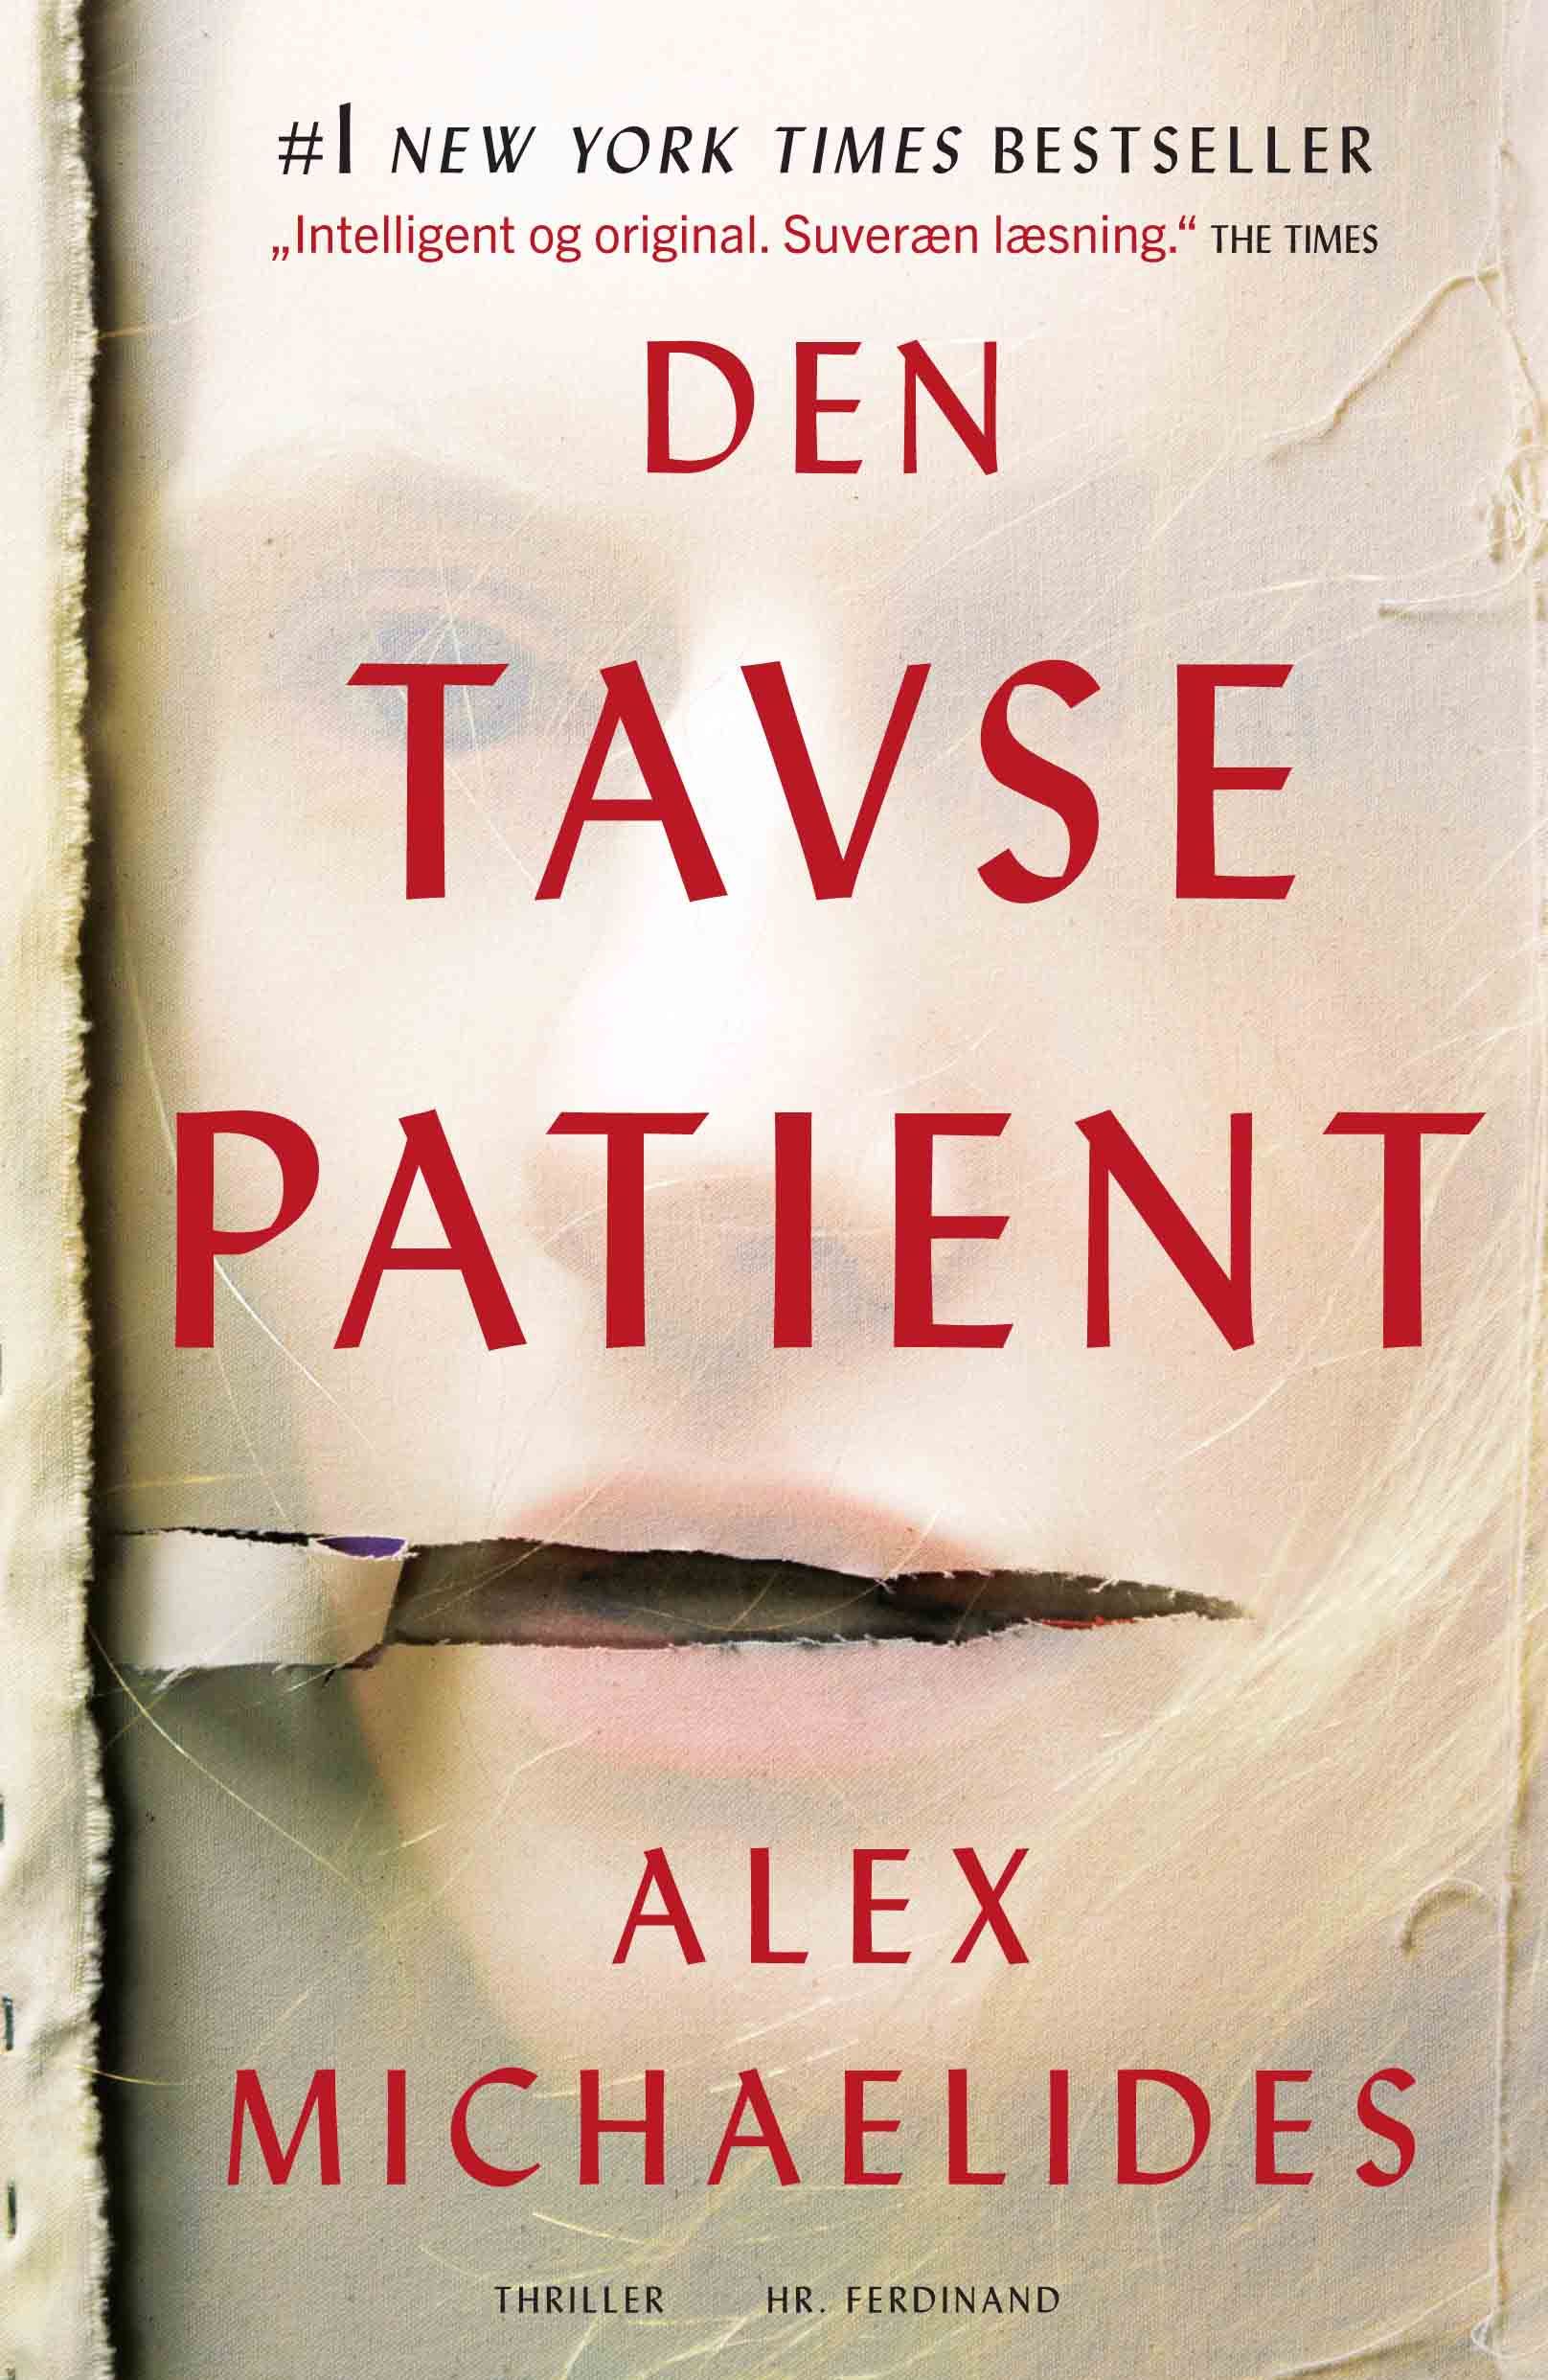 Den tavse patient, e-bog af Alex Michaelides